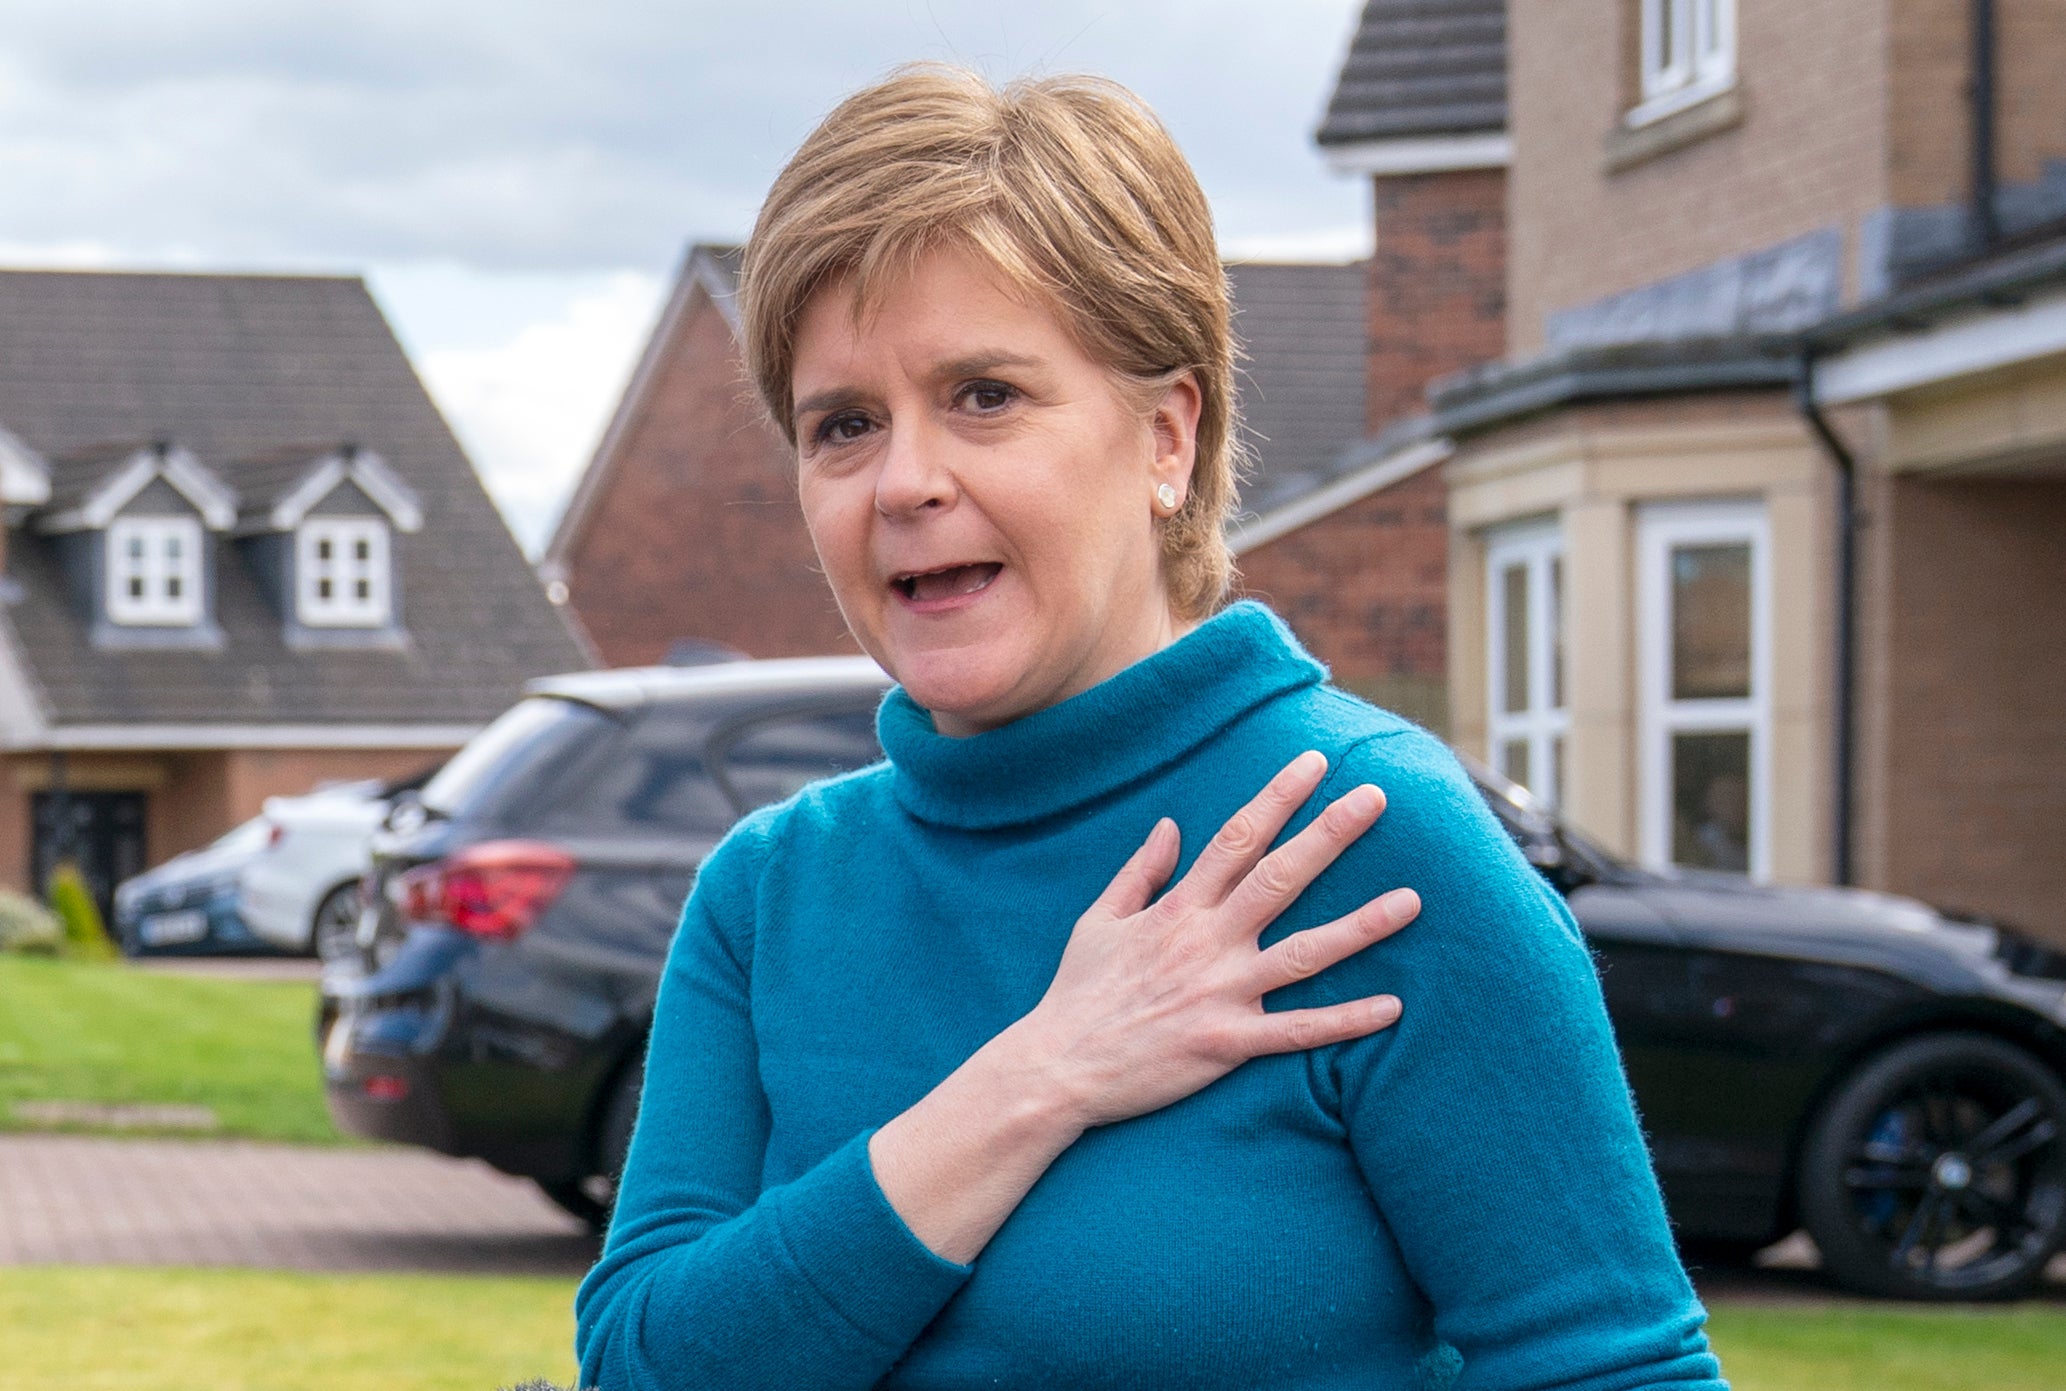 Nicola Sturgeon speaking to reporters outside her house near Glasgow